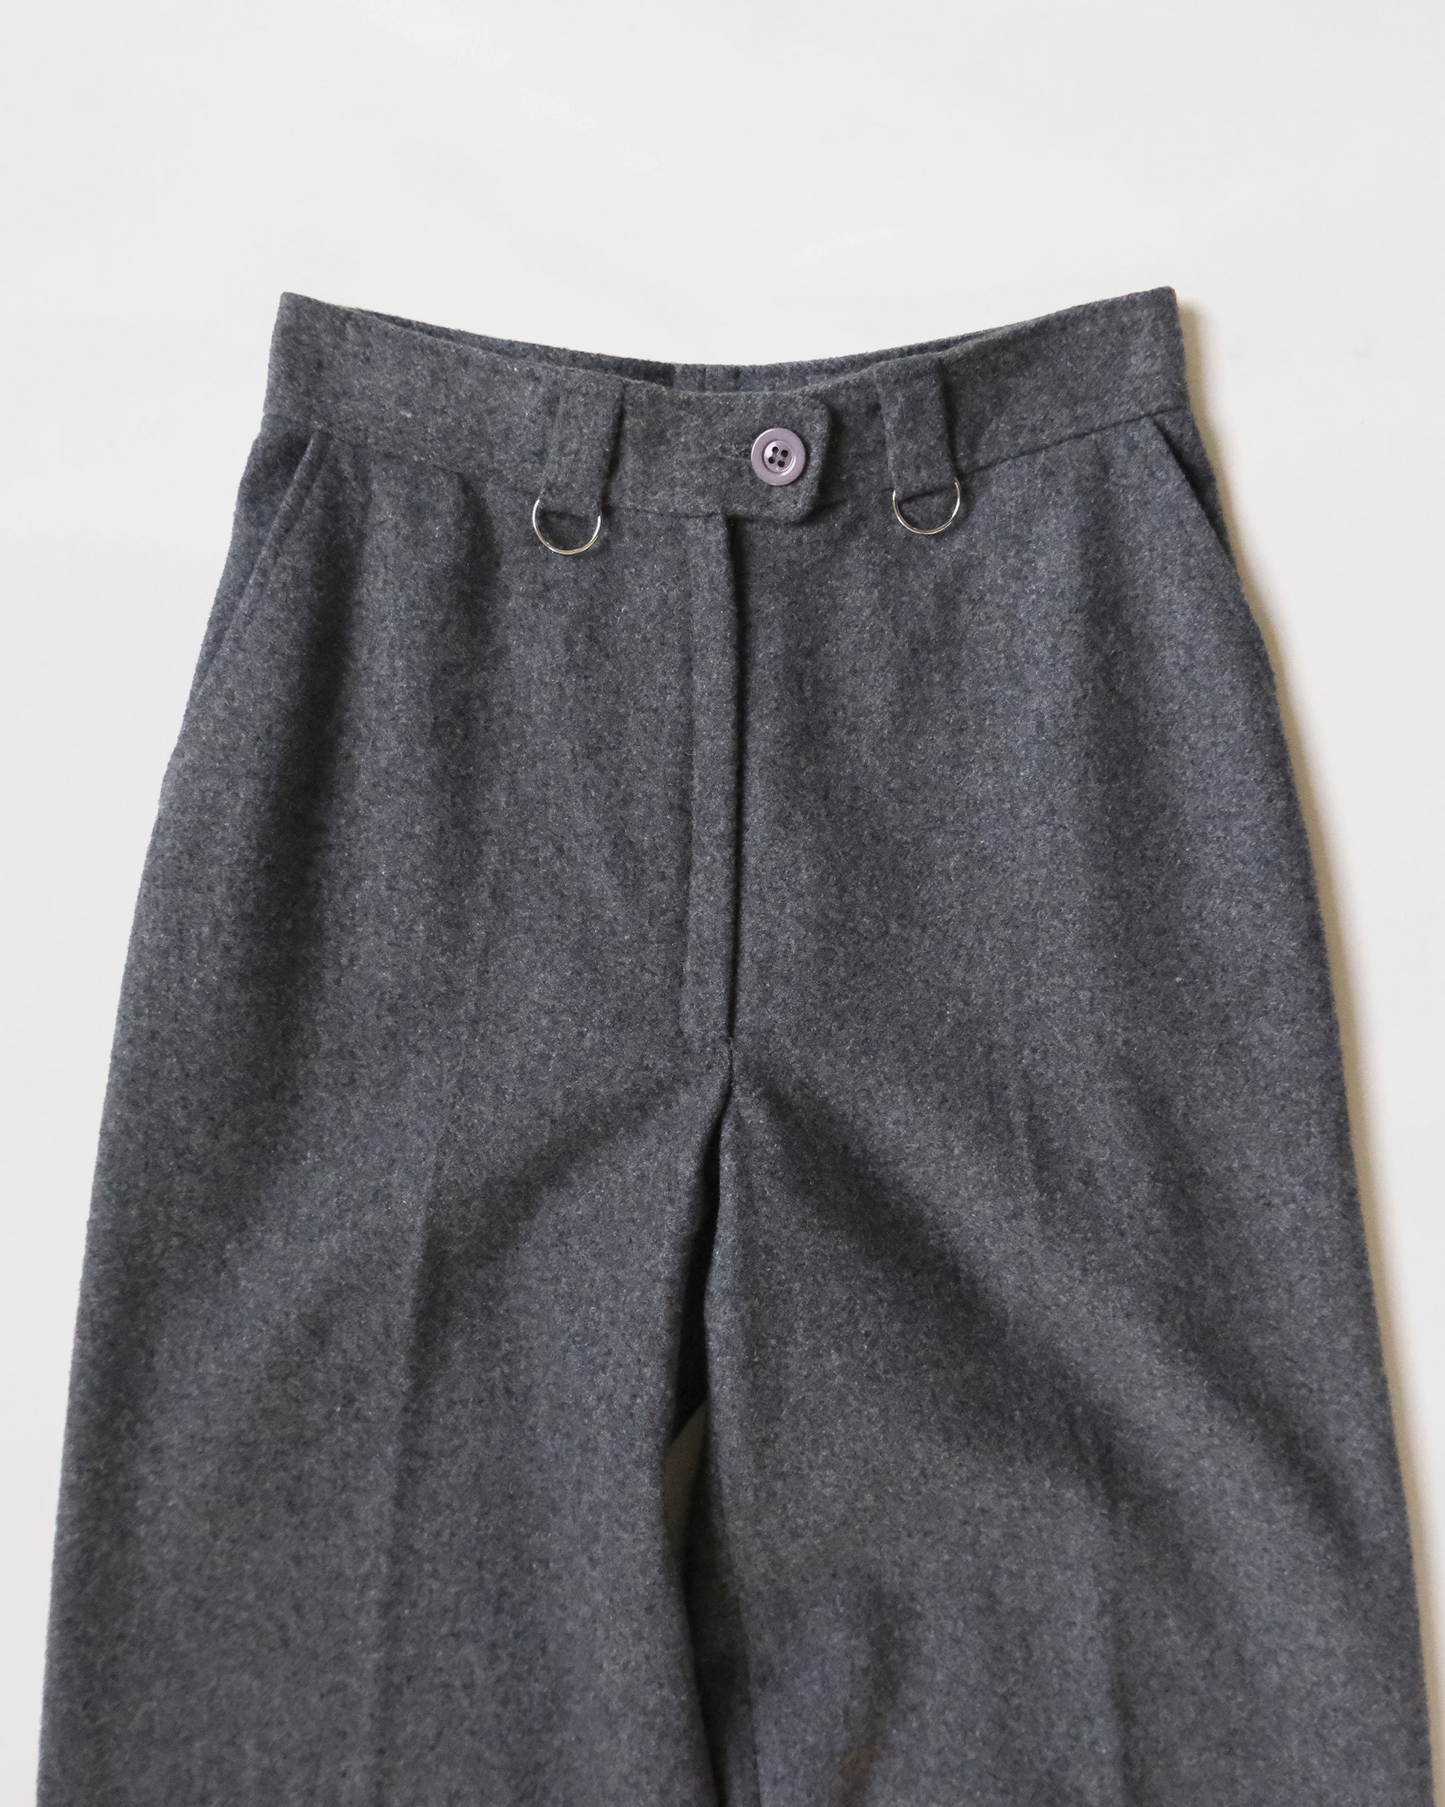 NOS Wool Gray Pants